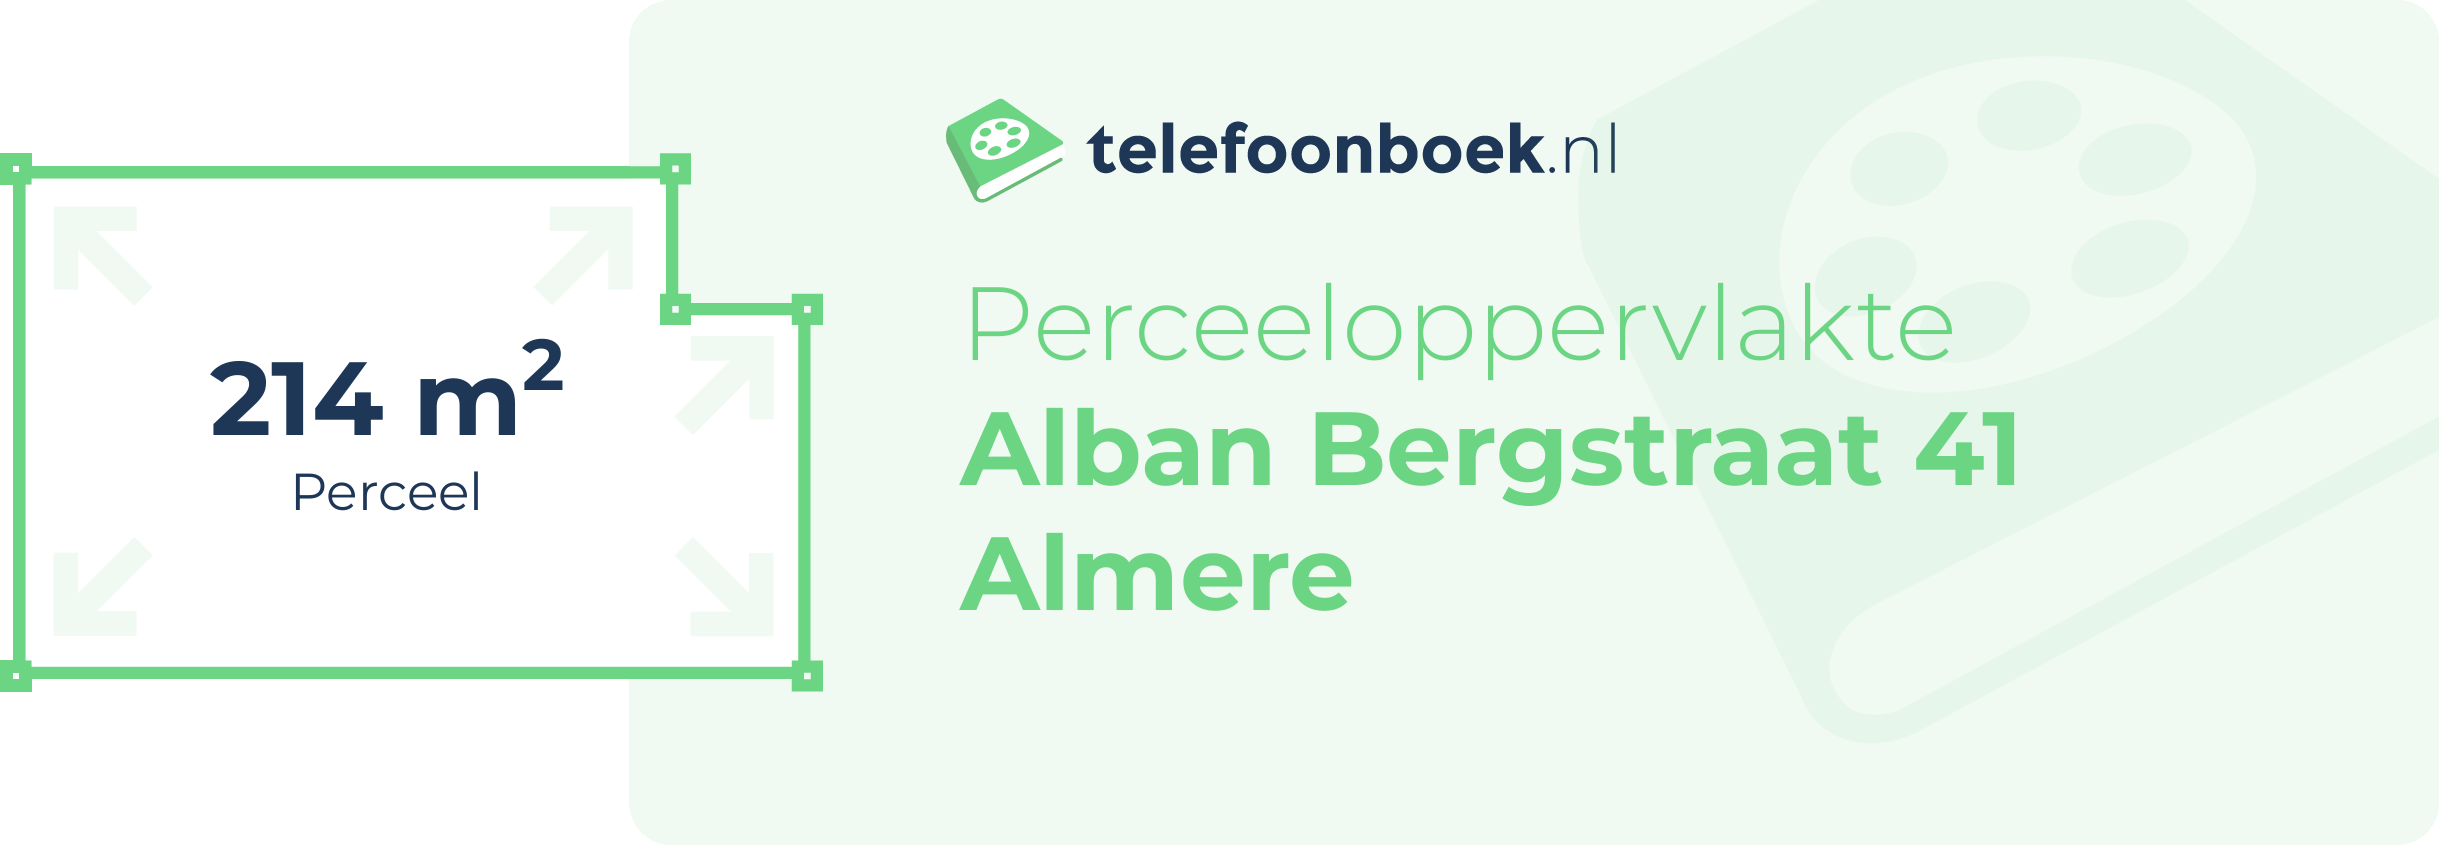 Perceeloppervlakte Alban Bergstraat 41 Almere